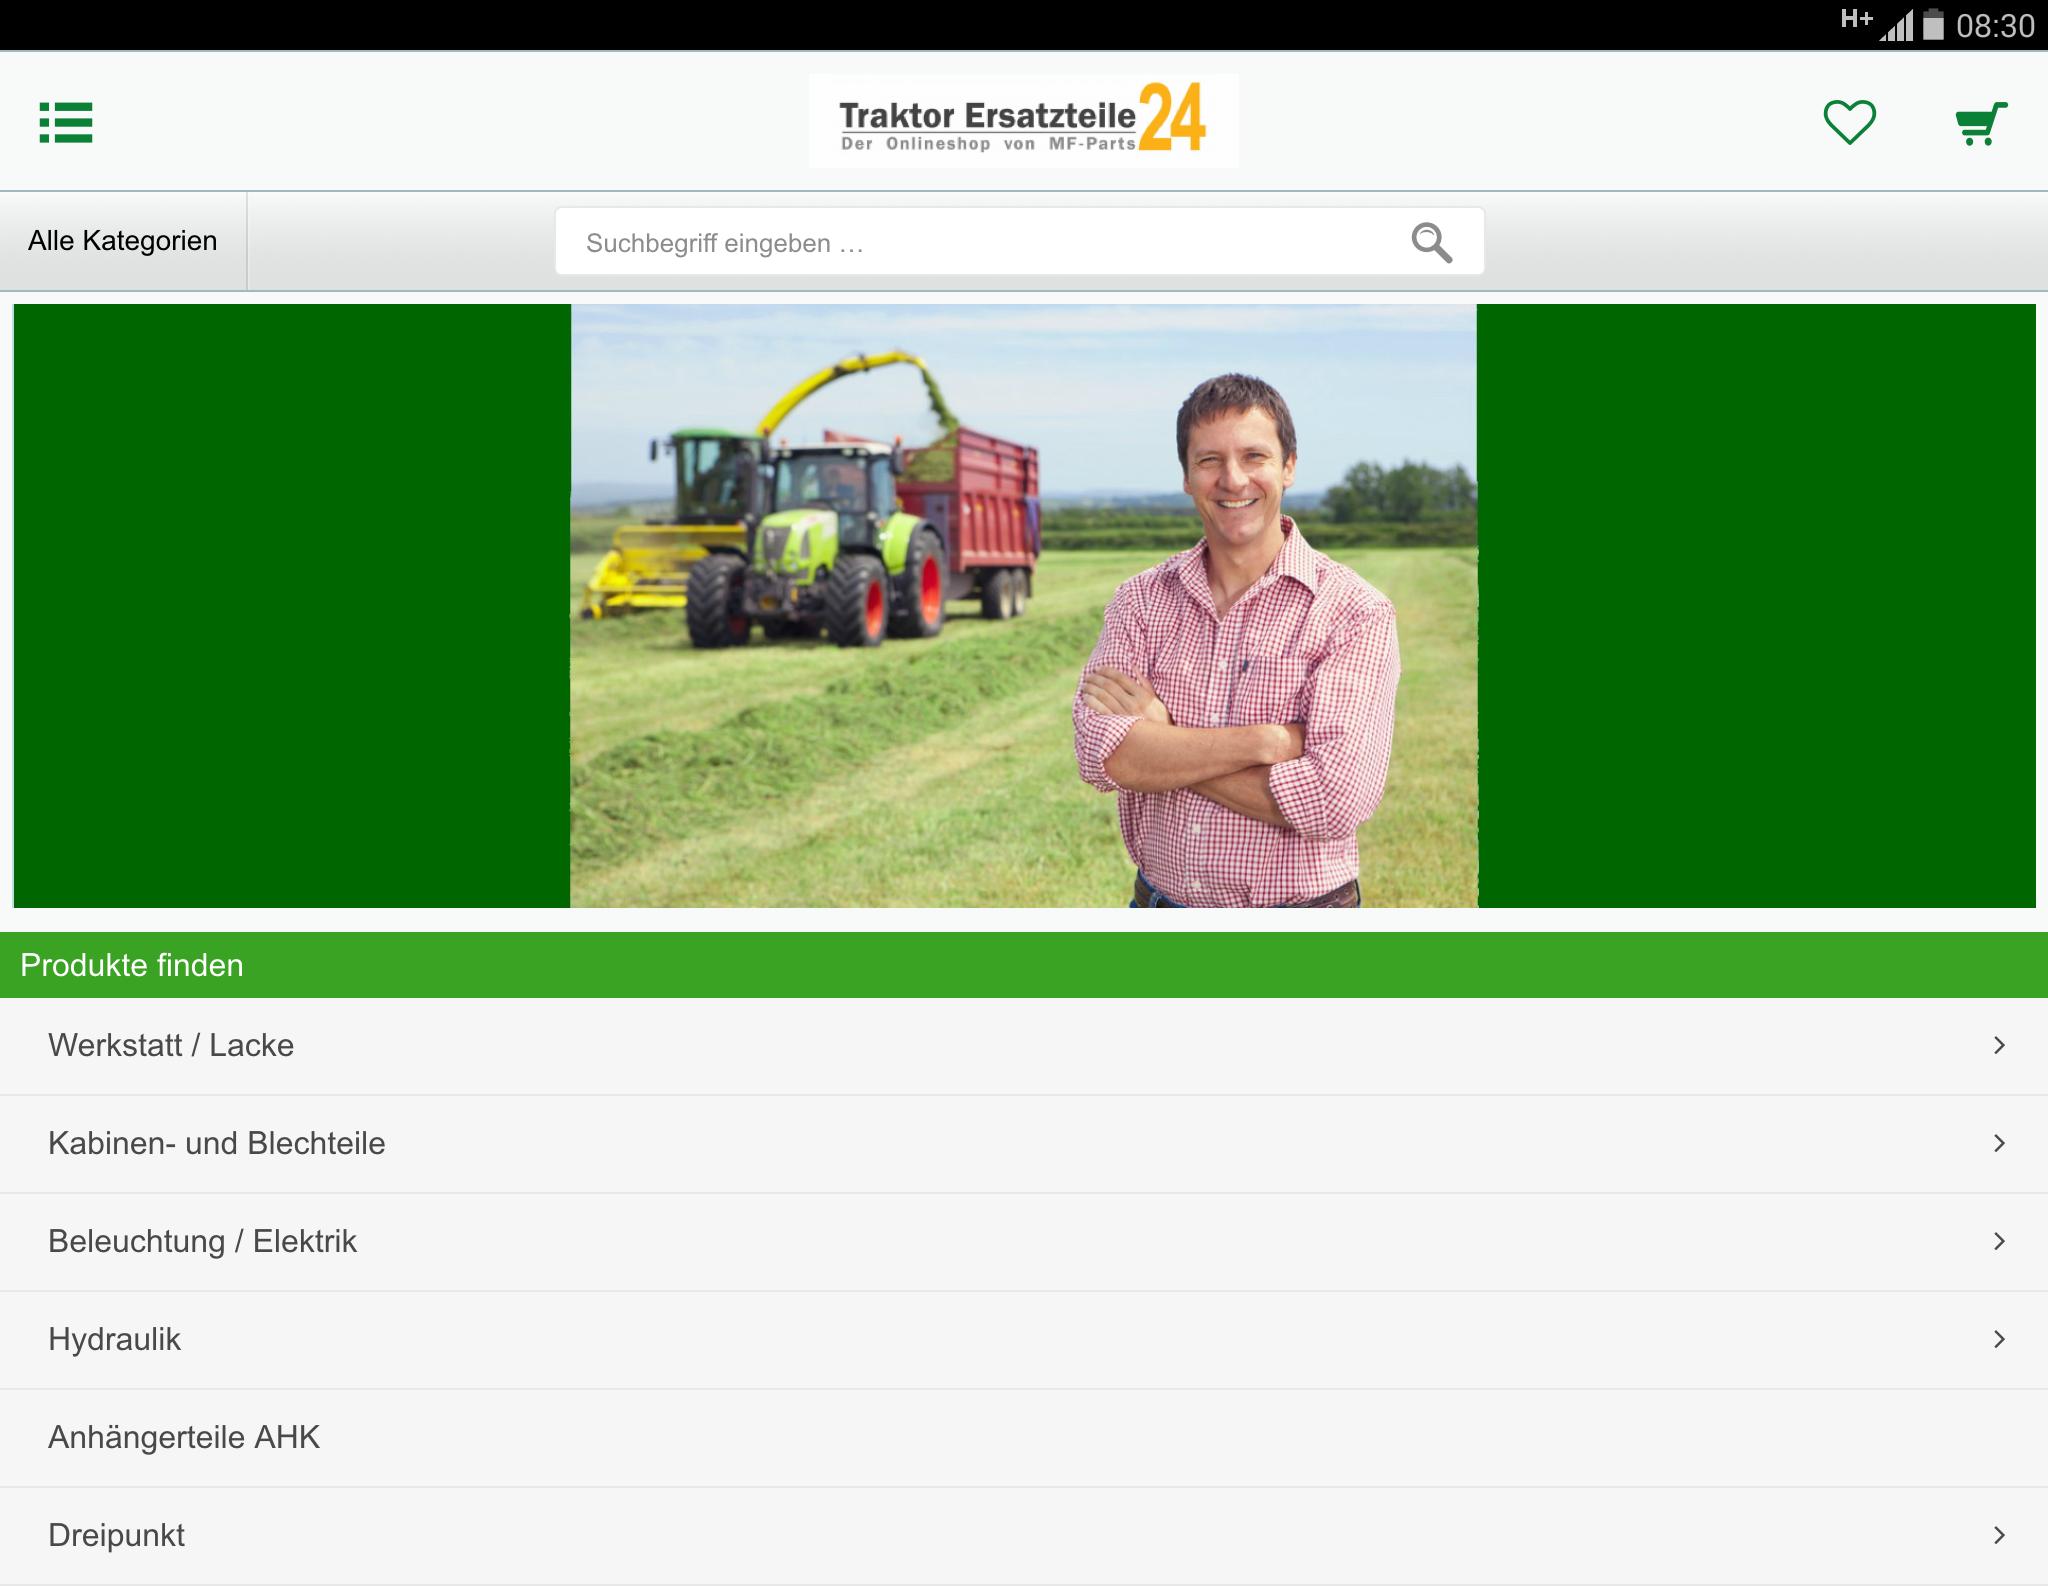 Traktor-Ersatzteile24 for Android - APK Download